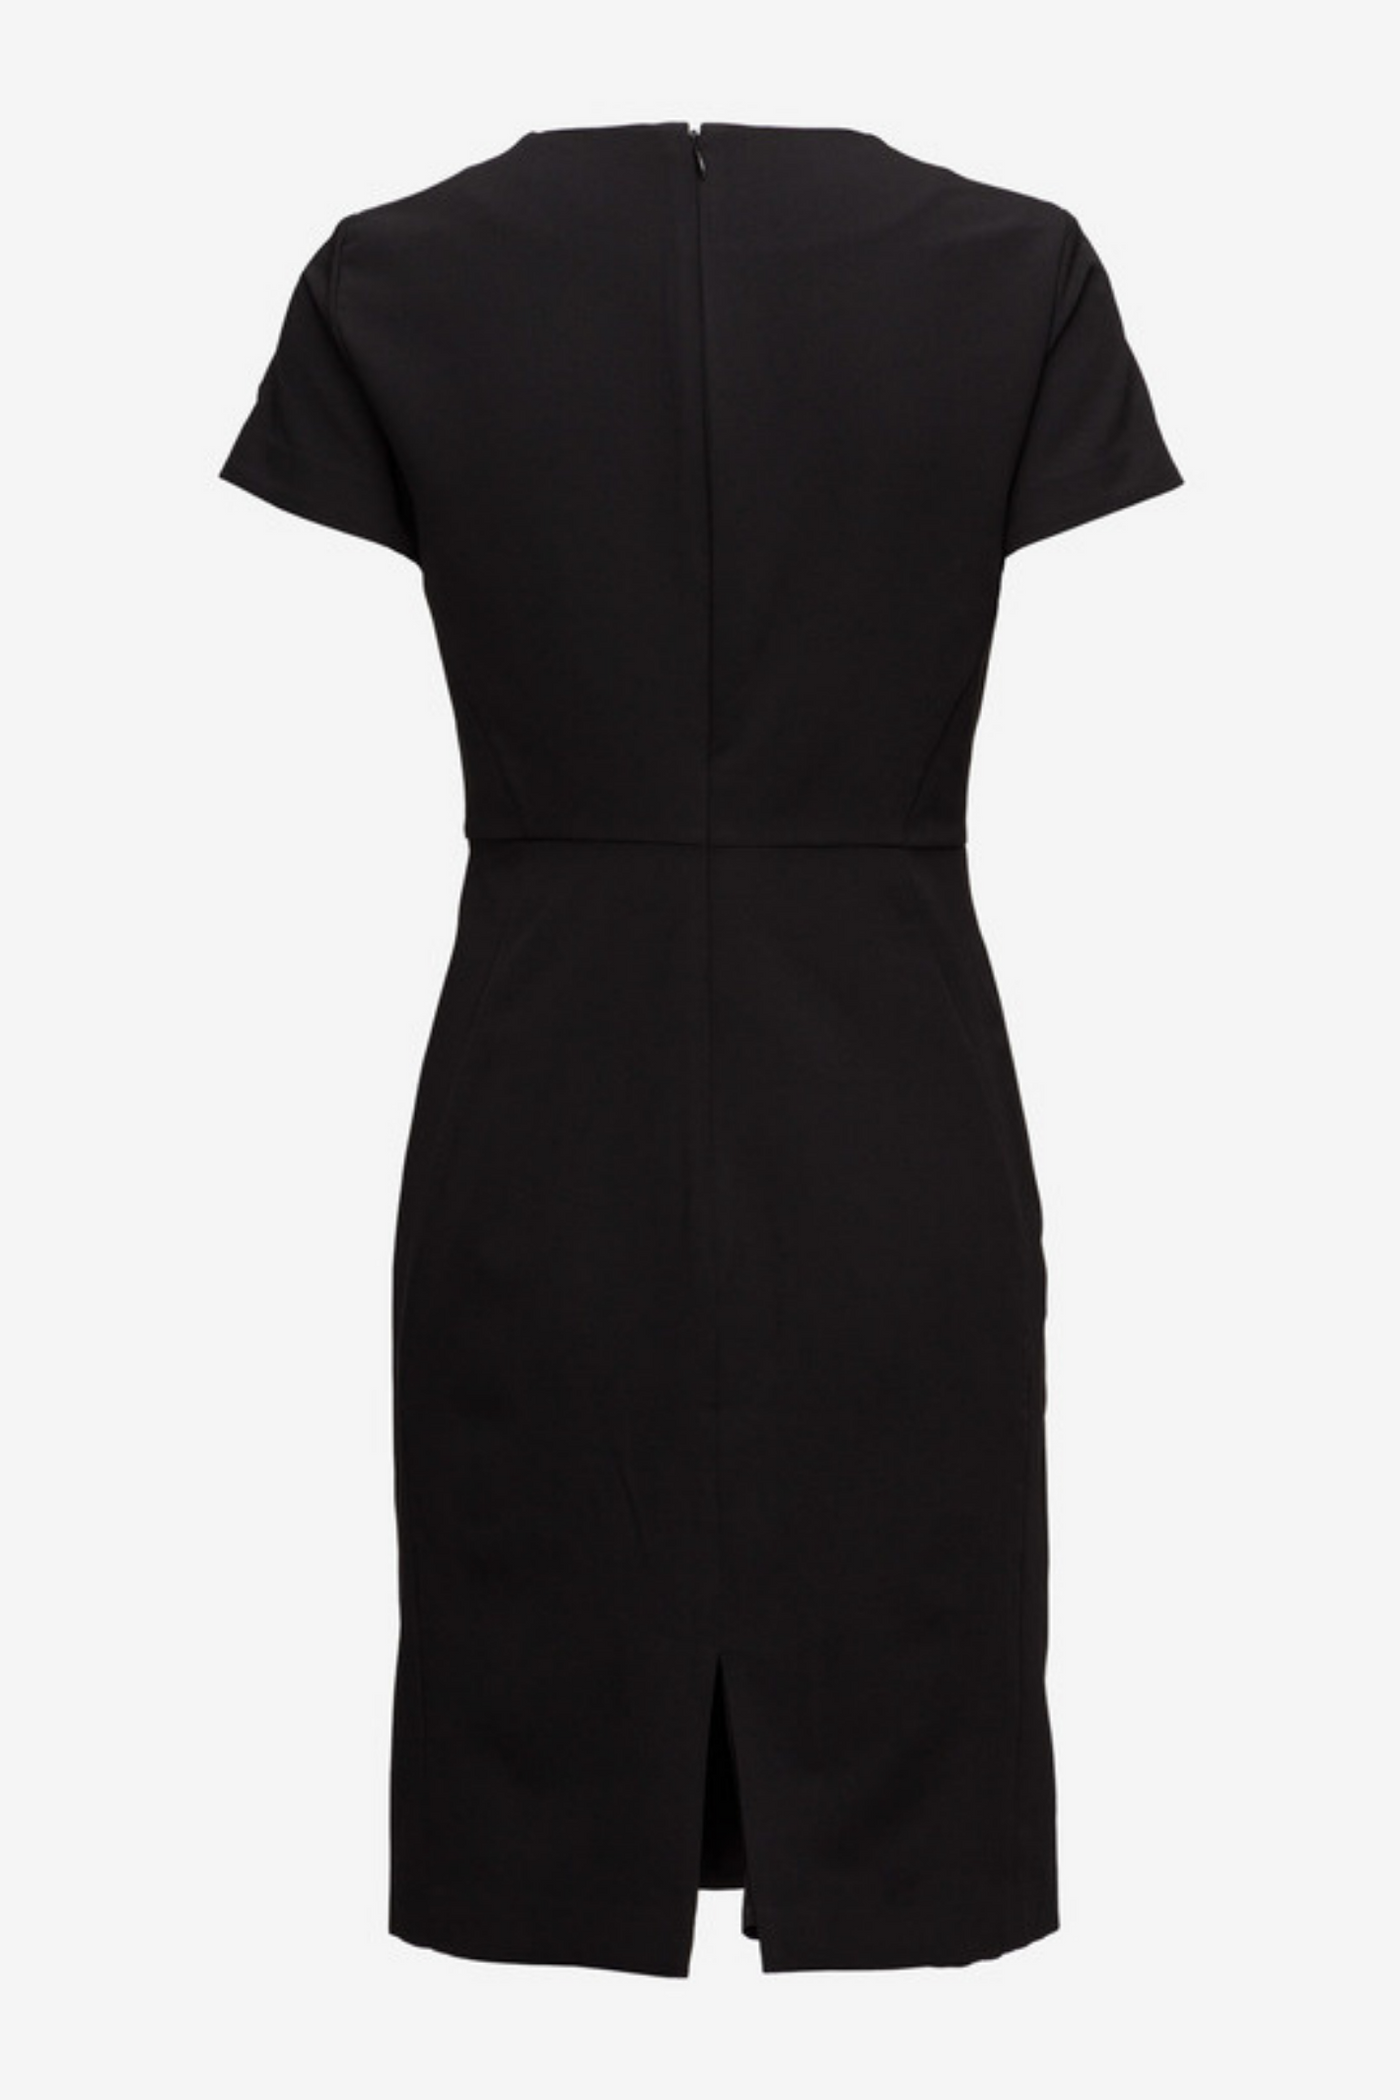 Inwear Leigh Dress - Jezabel Boutique